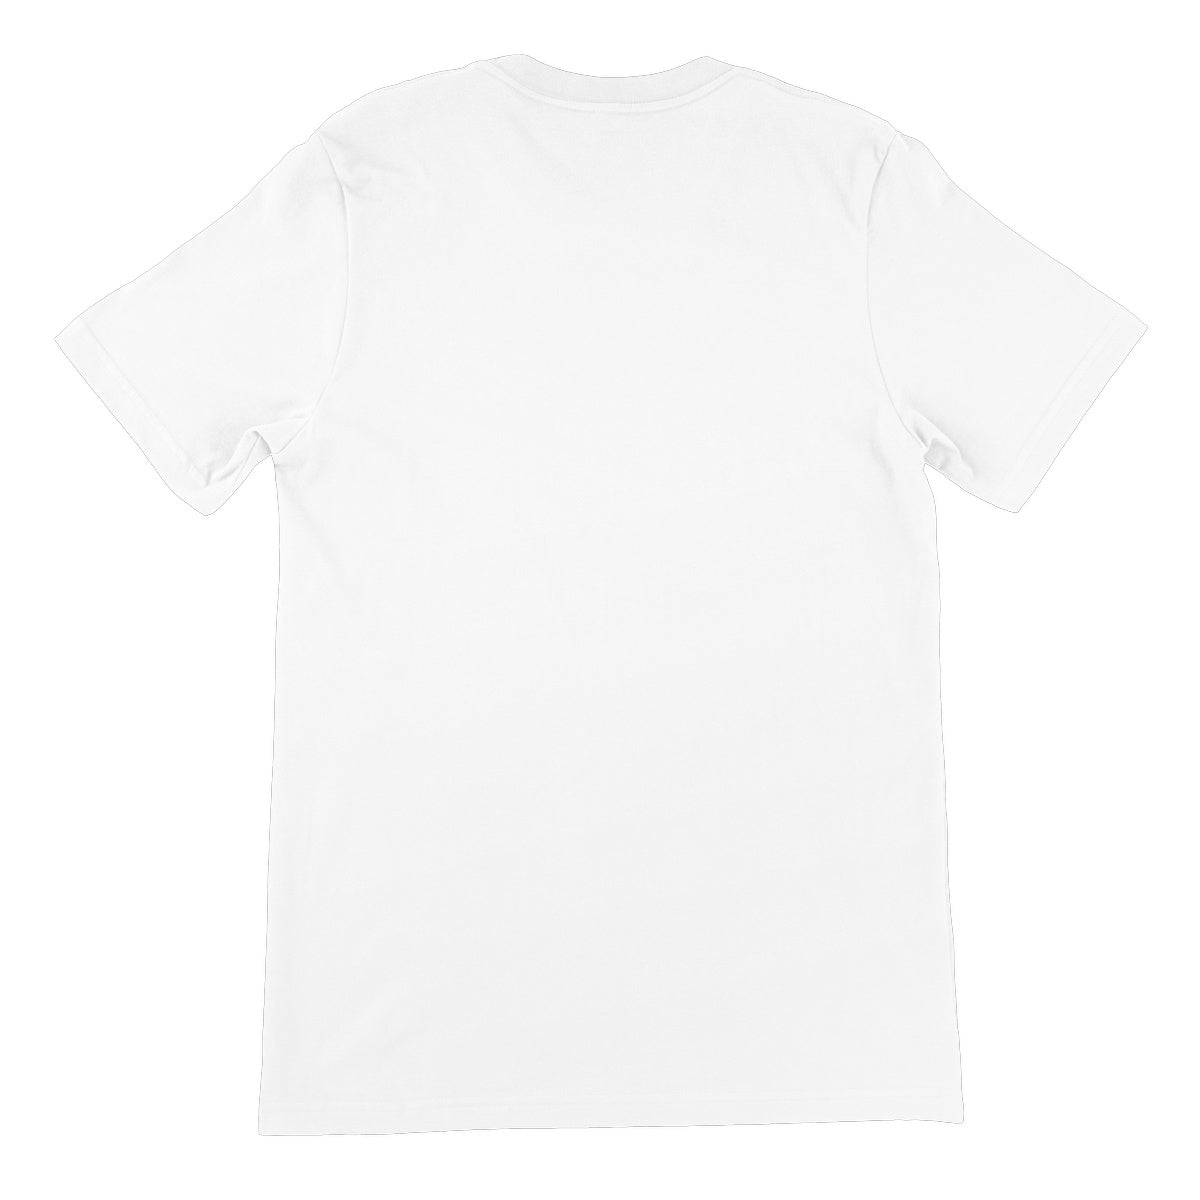 Rogue Illustrated Tee Unisex Short Sleeve T-Shirt